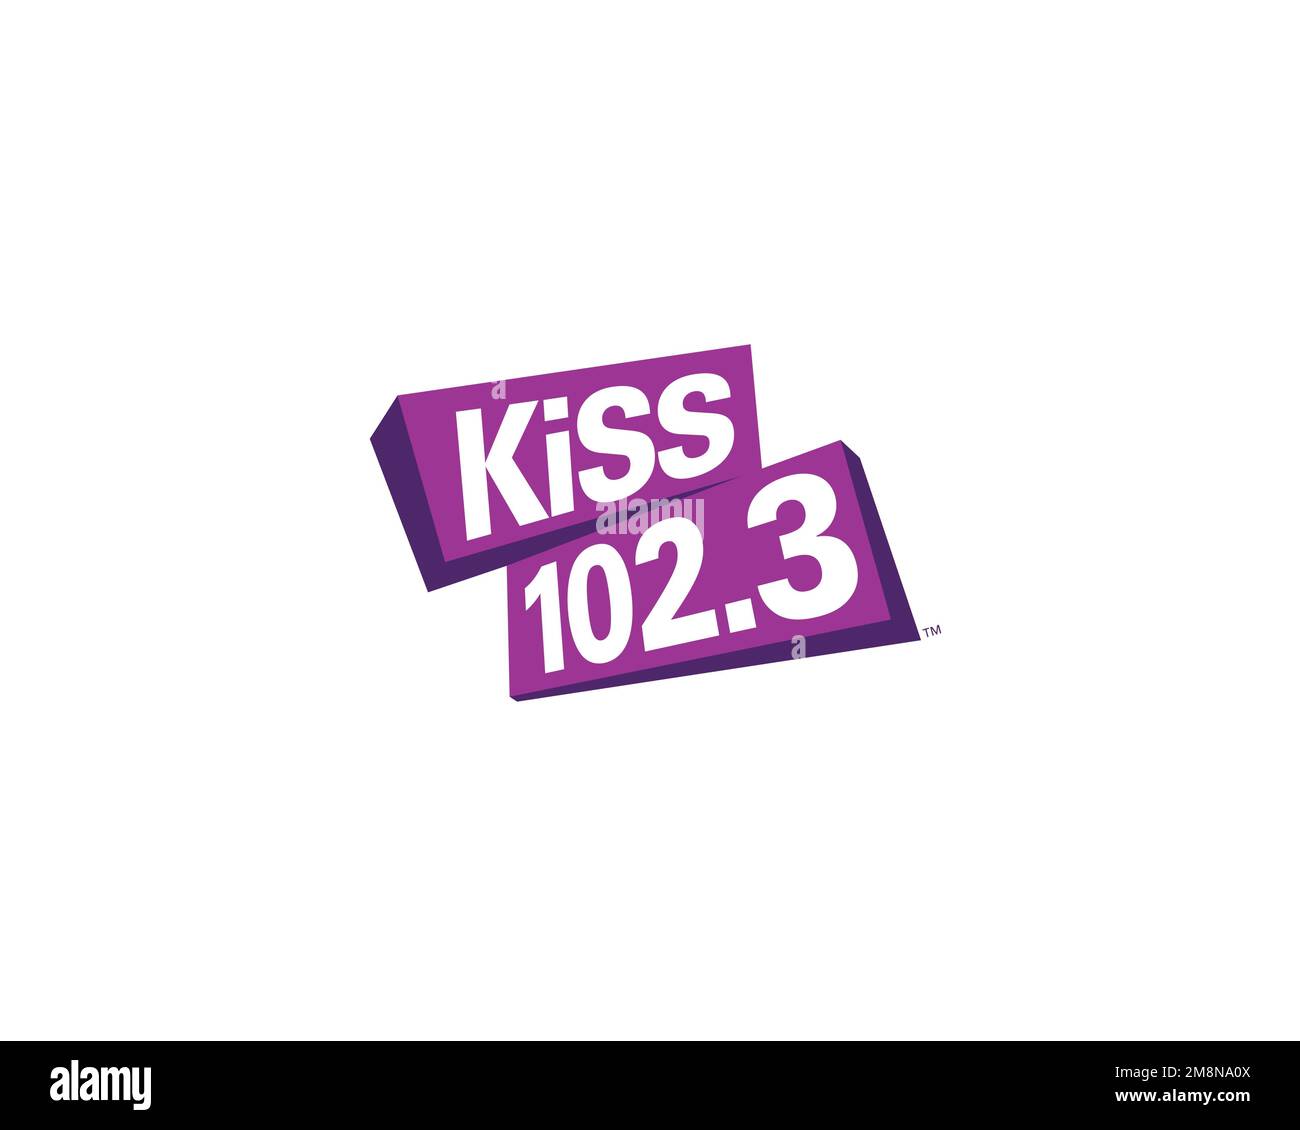 CKY FM, rotated logo, white background Stock Photo